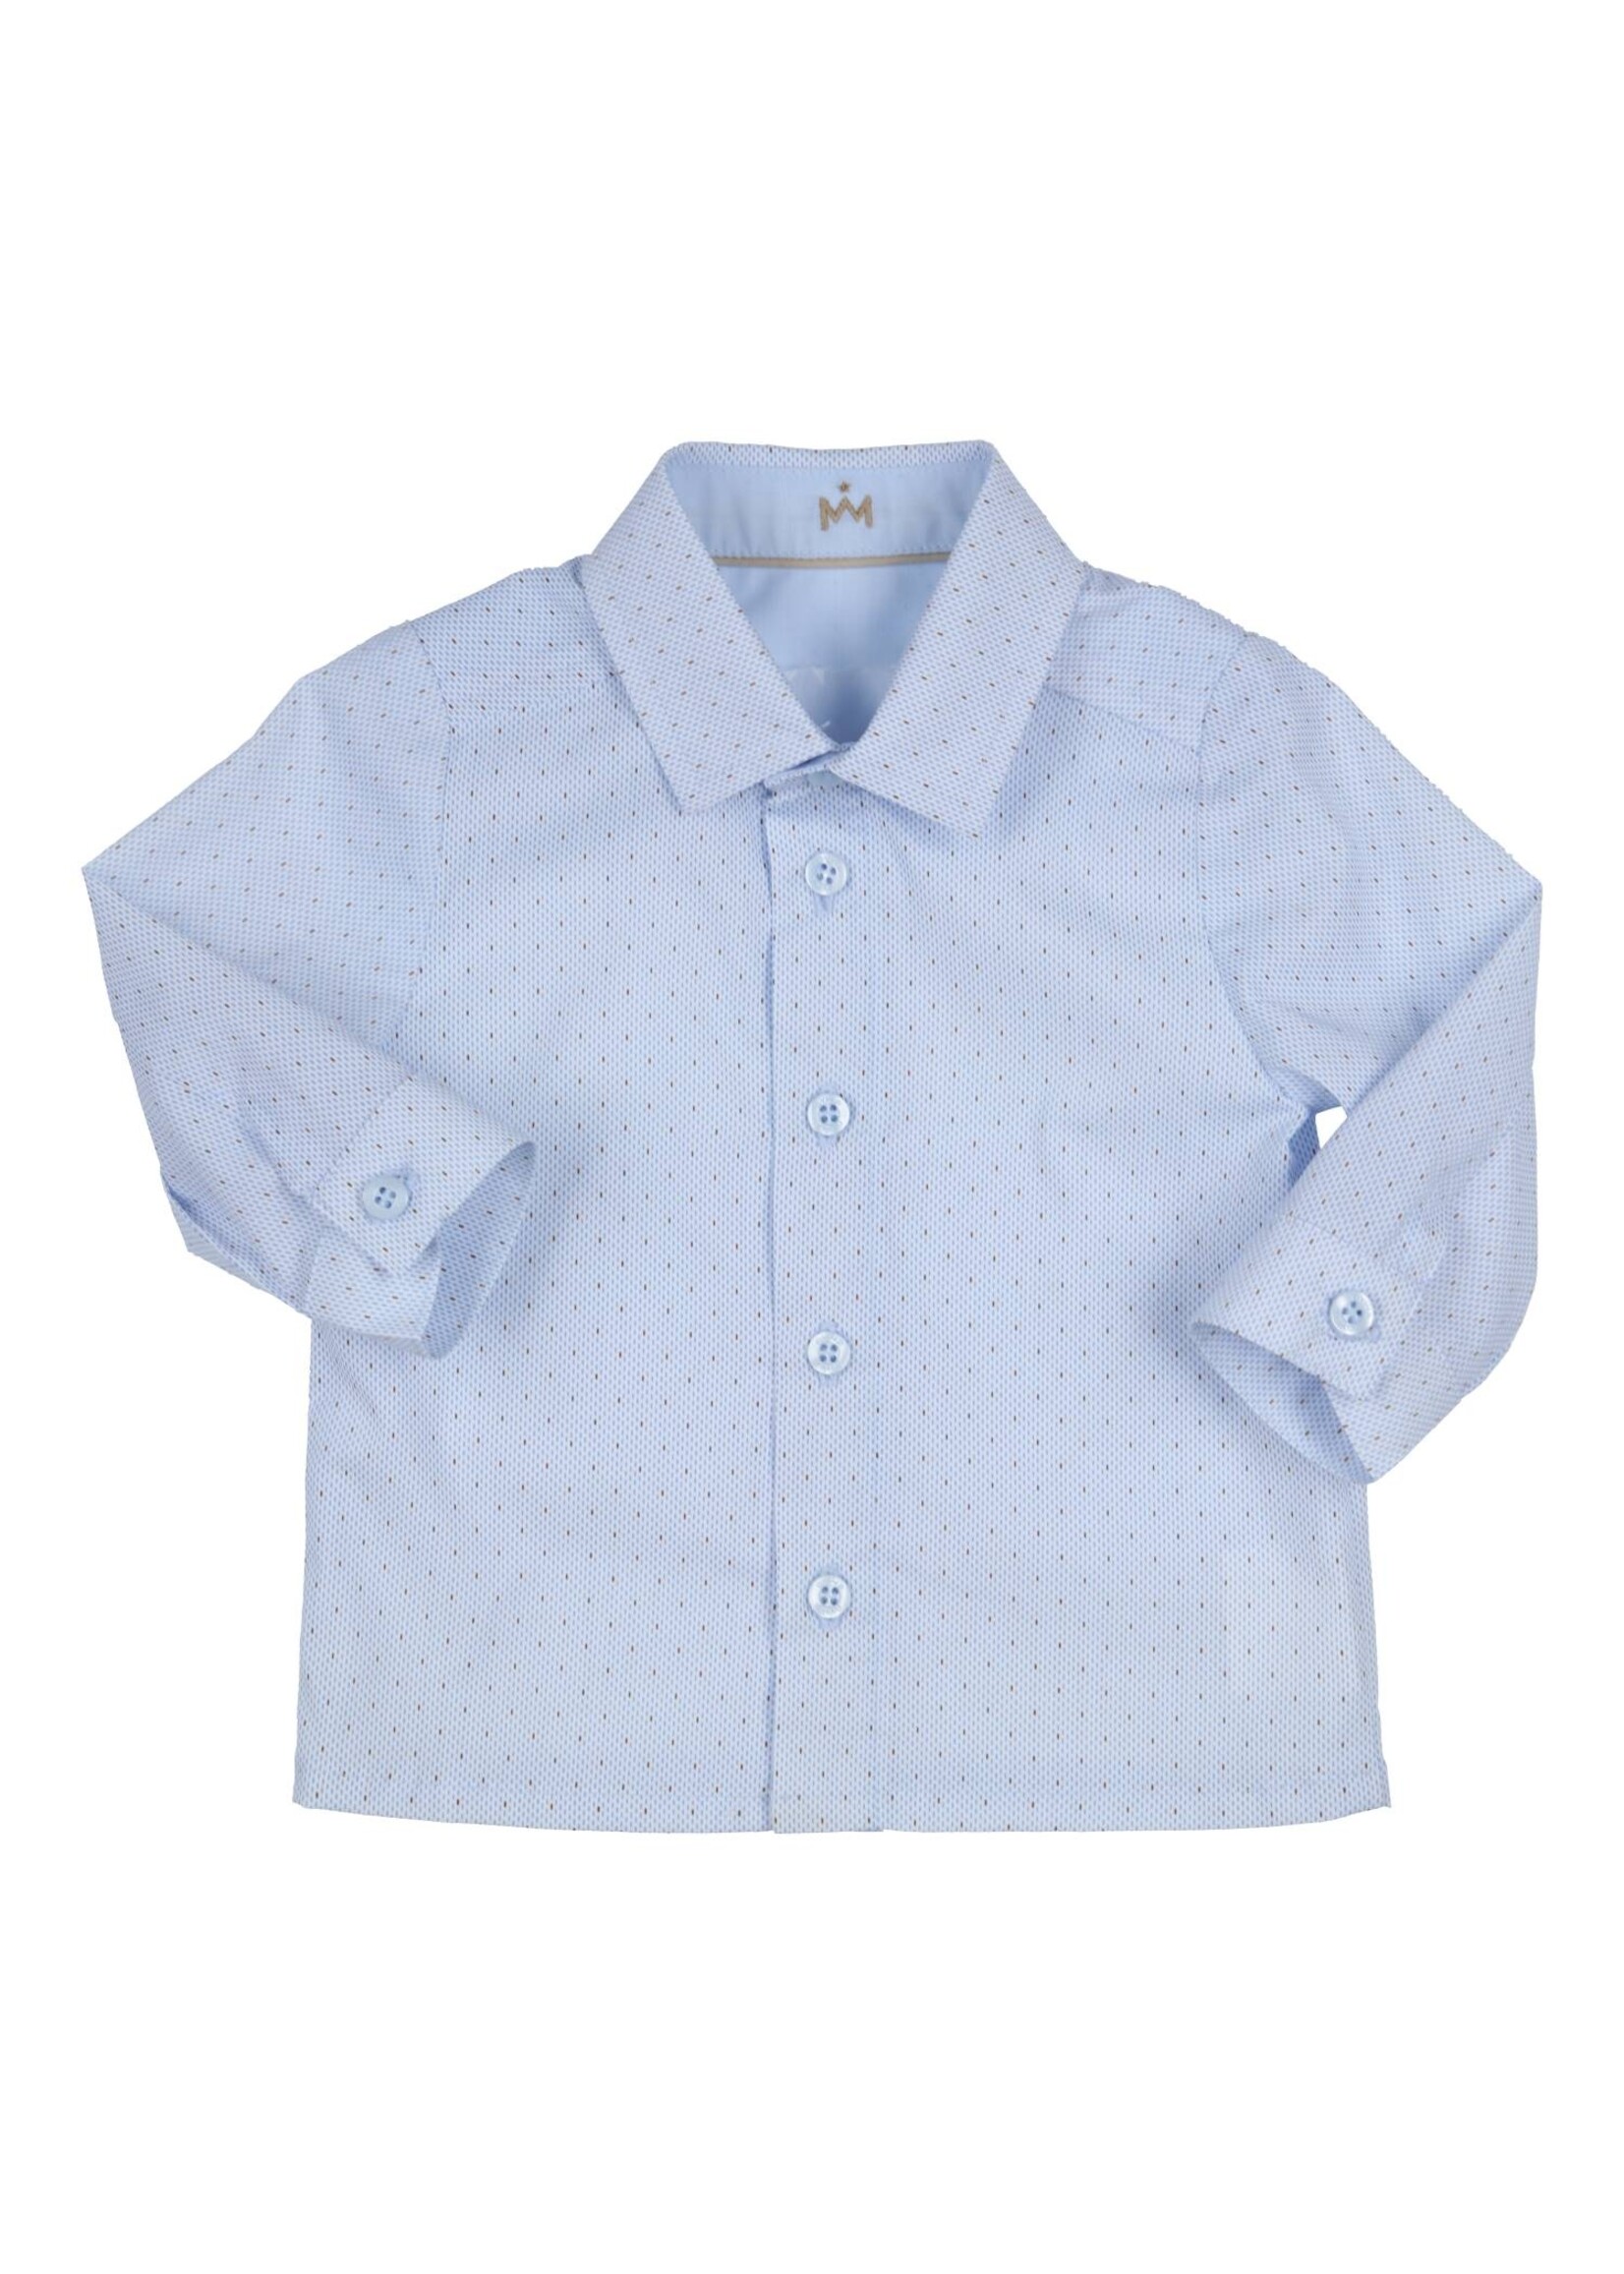 Gymp Boys Shirt Armand 361-4104-20 Light Blue